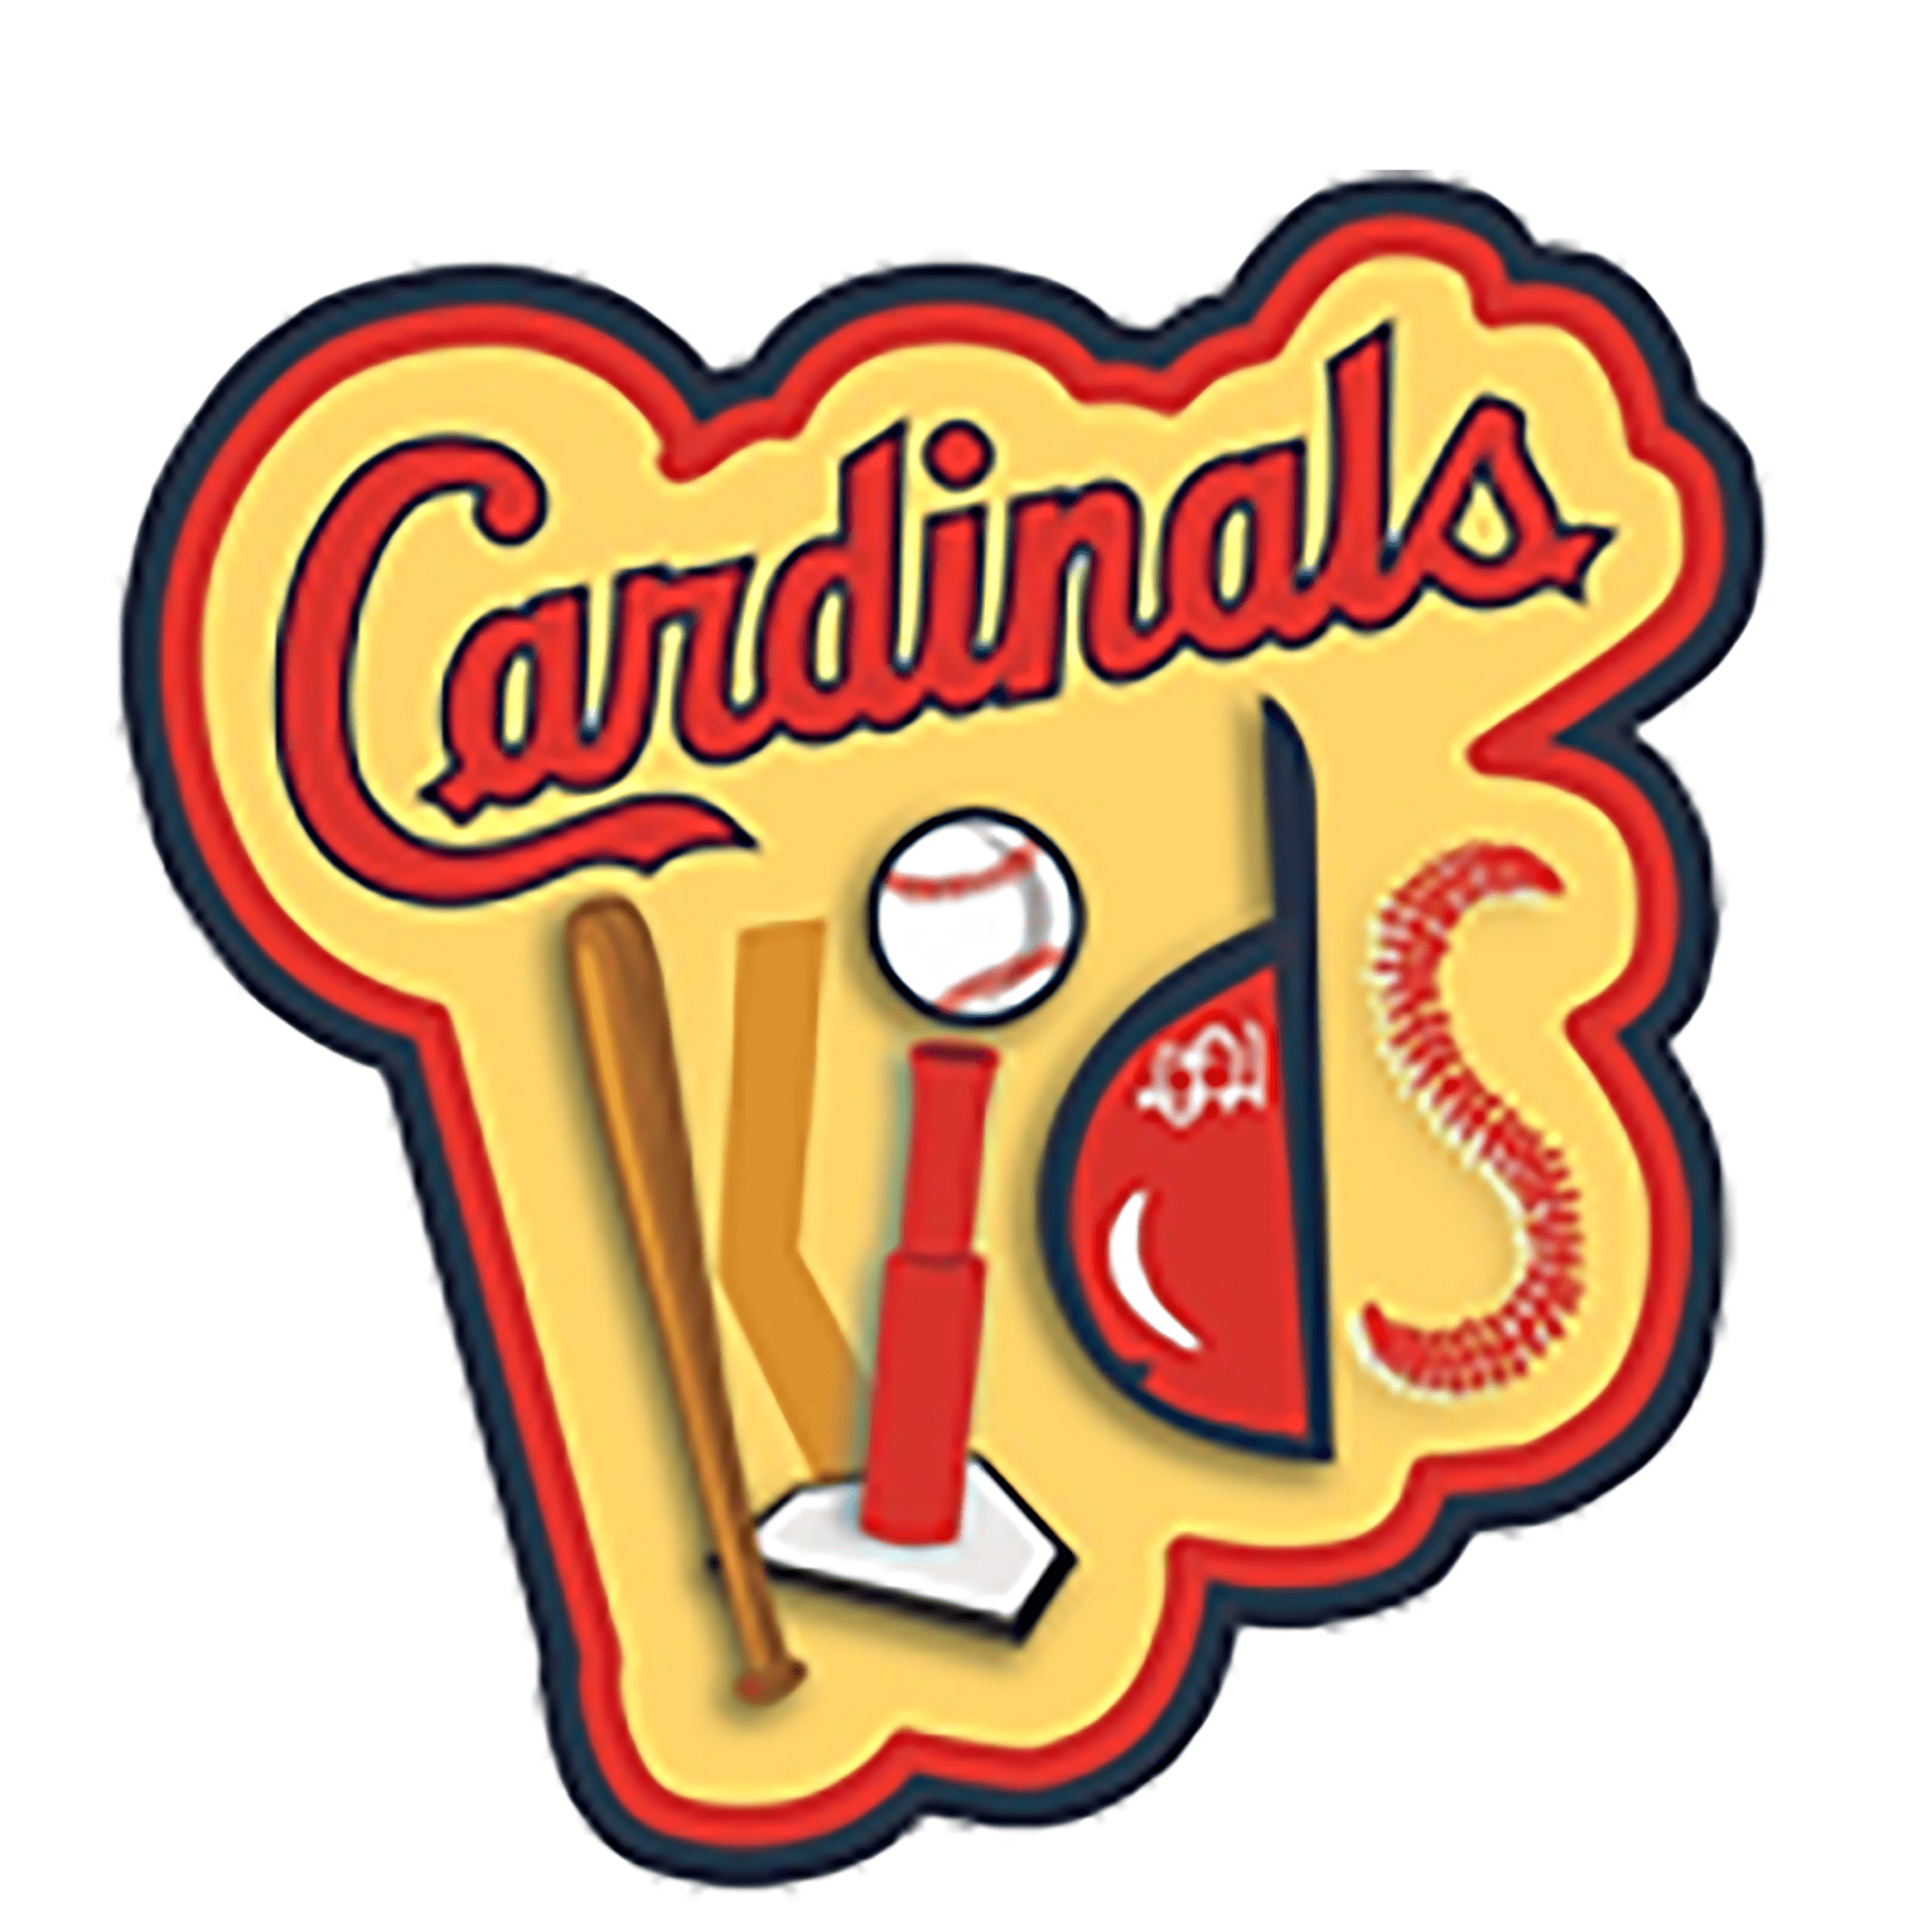 St. Louis Cardinals Kids in St. Louis Cardinals Team Shop 